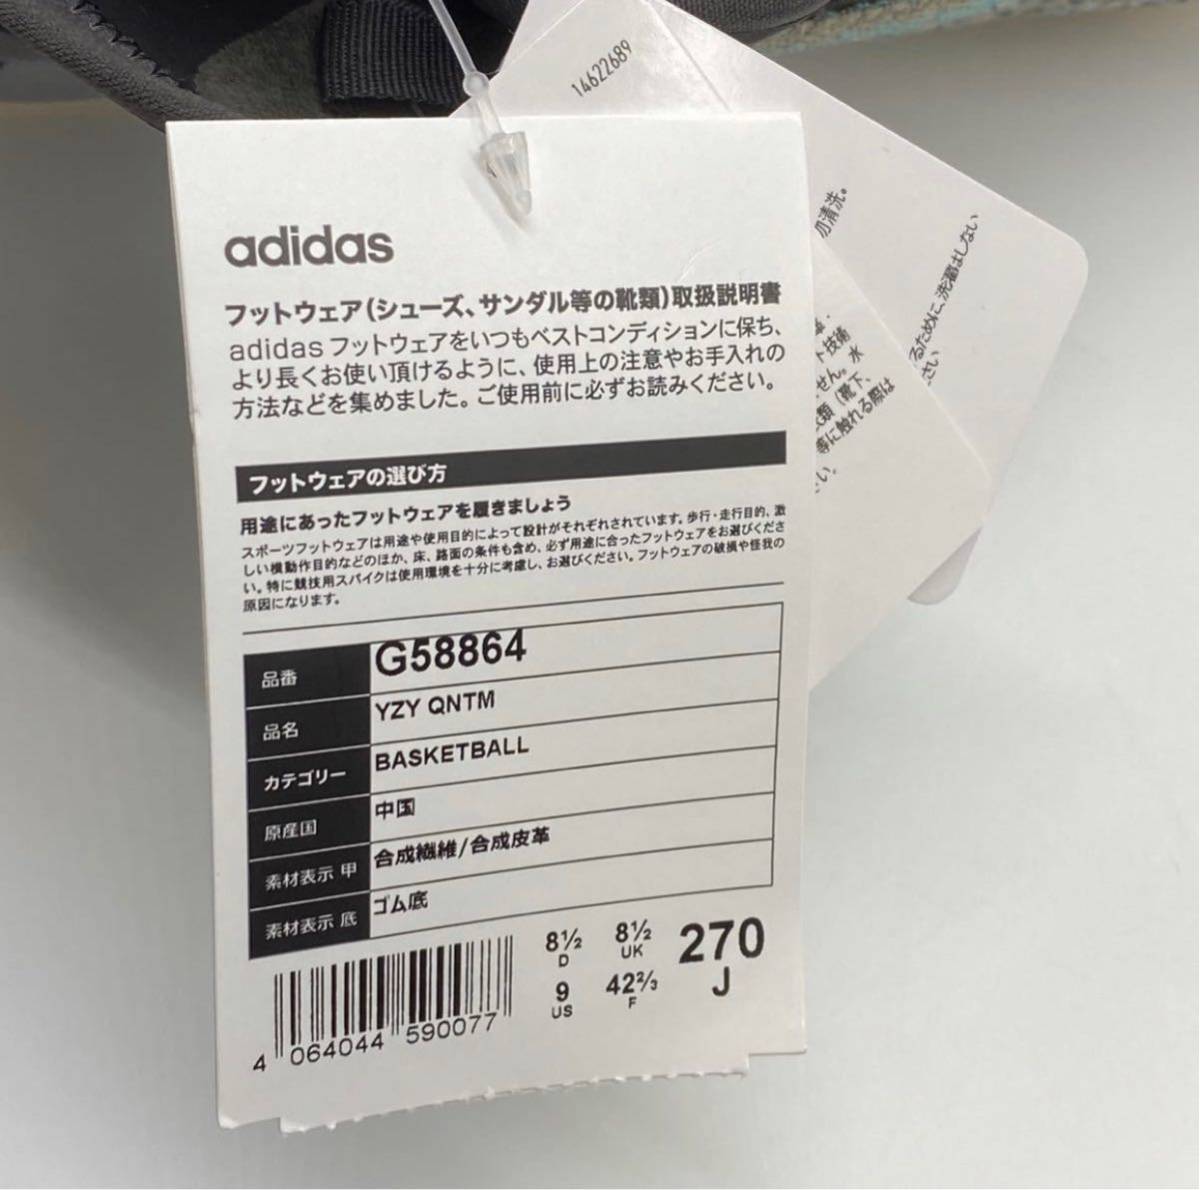 【27cm】新品 adidas Yeezy QNTM “Teal Blue” アディダス イージー クォンタム ティールブルー (G58864) 302_画像7